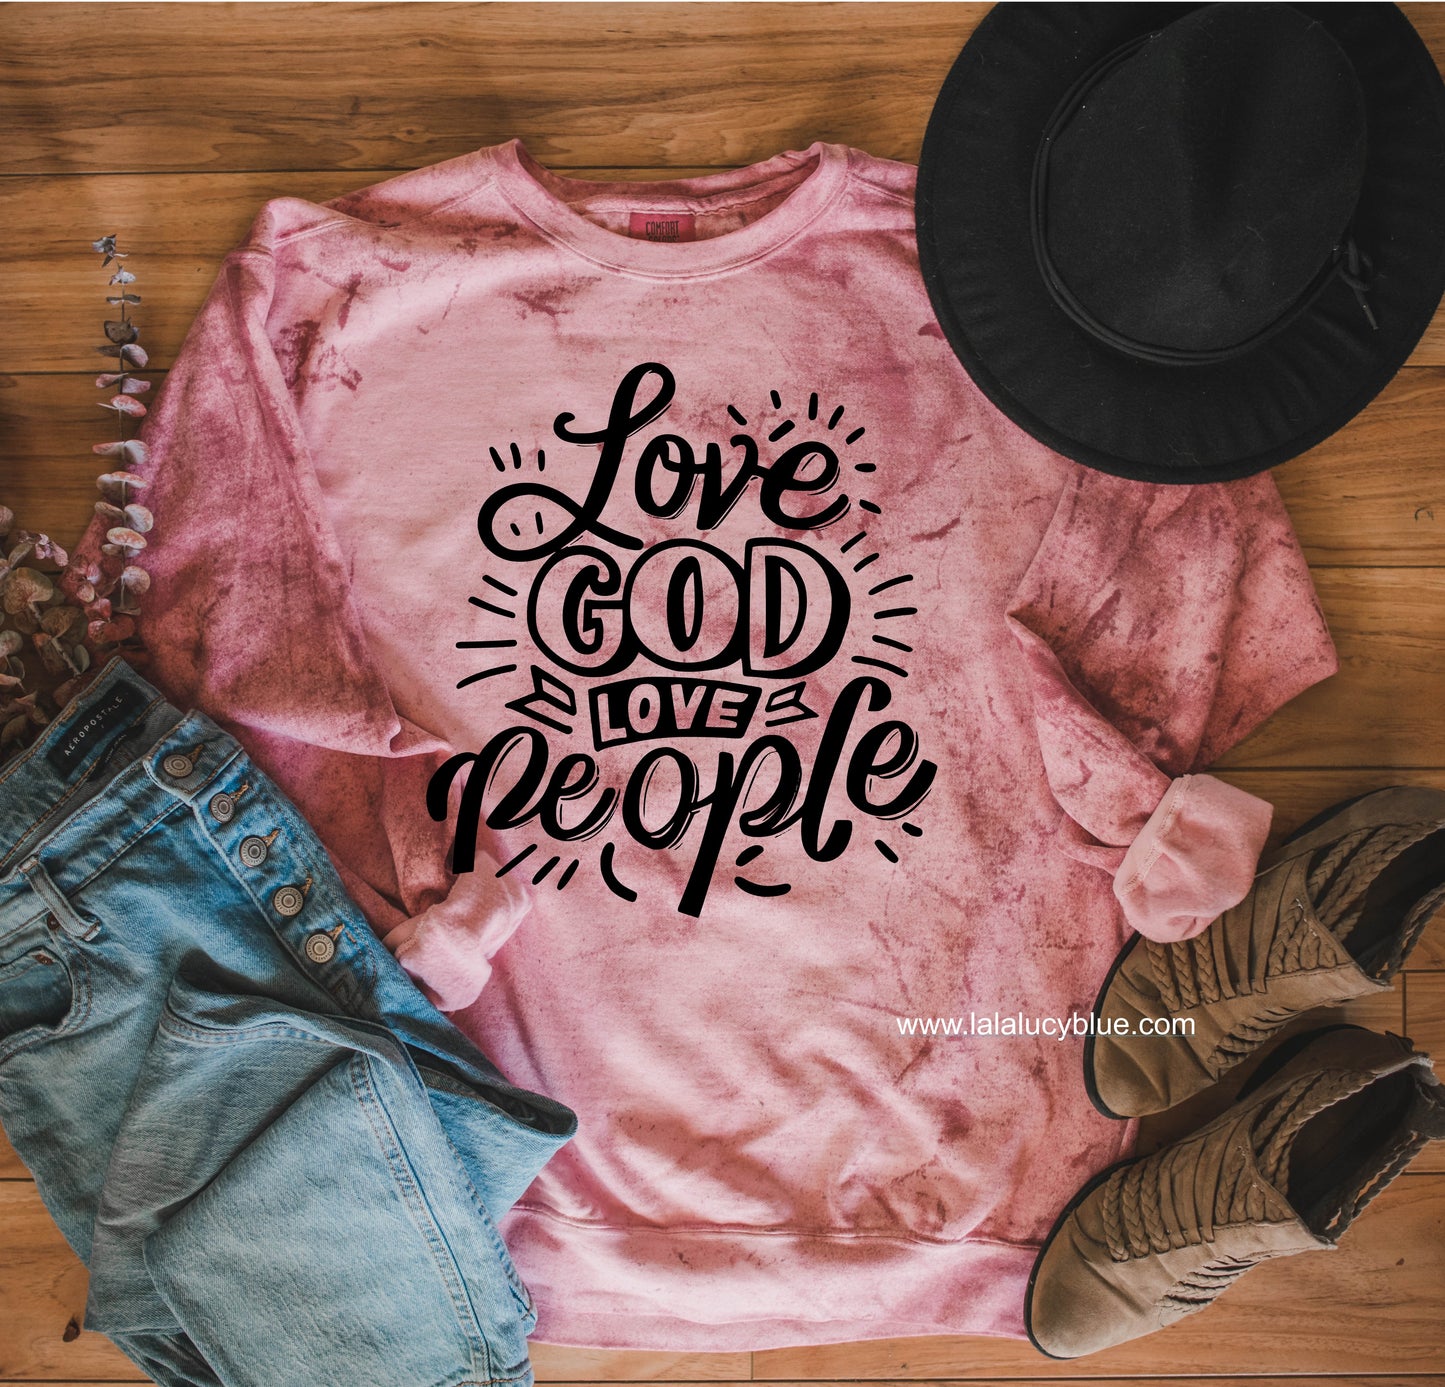 Love God Love People Sweatshirt